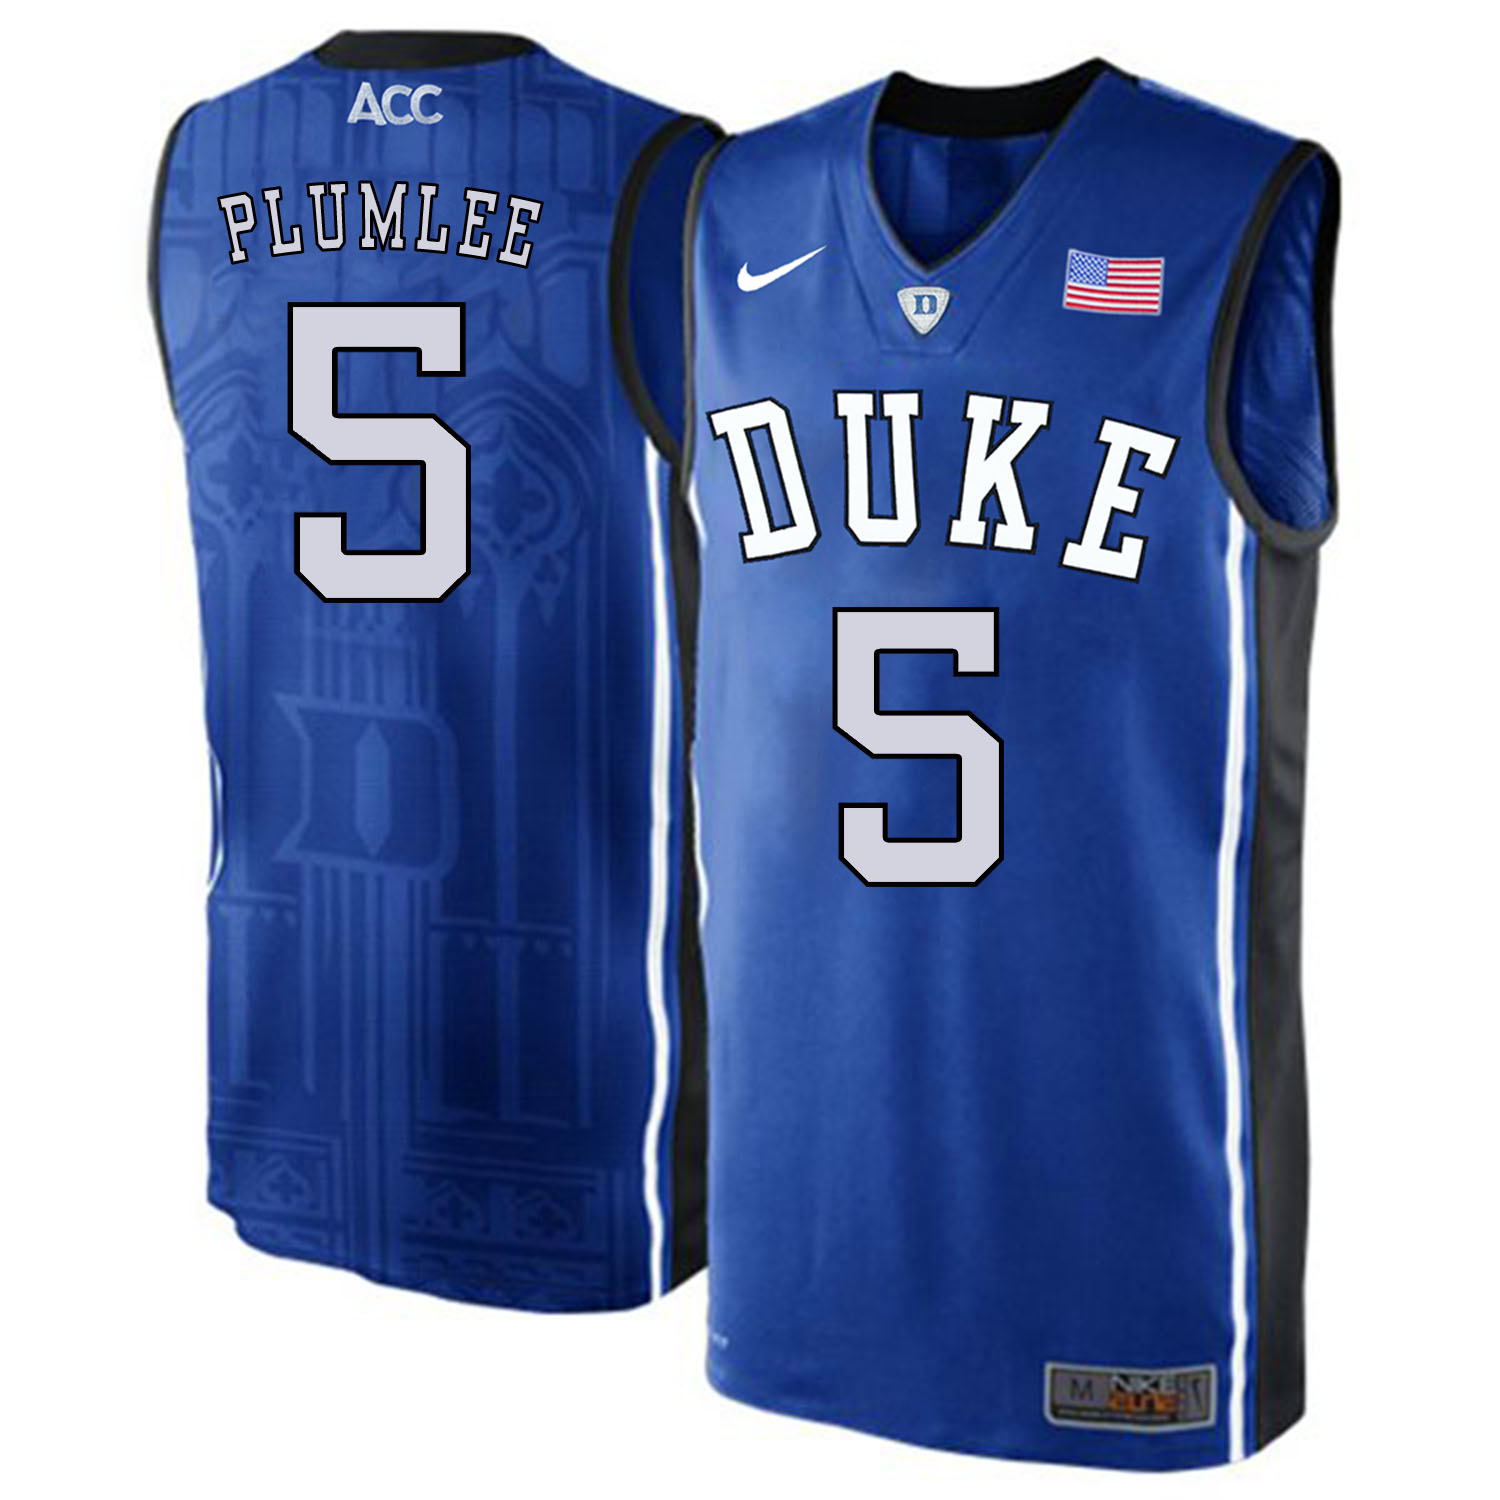 Duke Blue Devils 5 Mason Plumlee Blue Elite Nike College Basketball Jersey